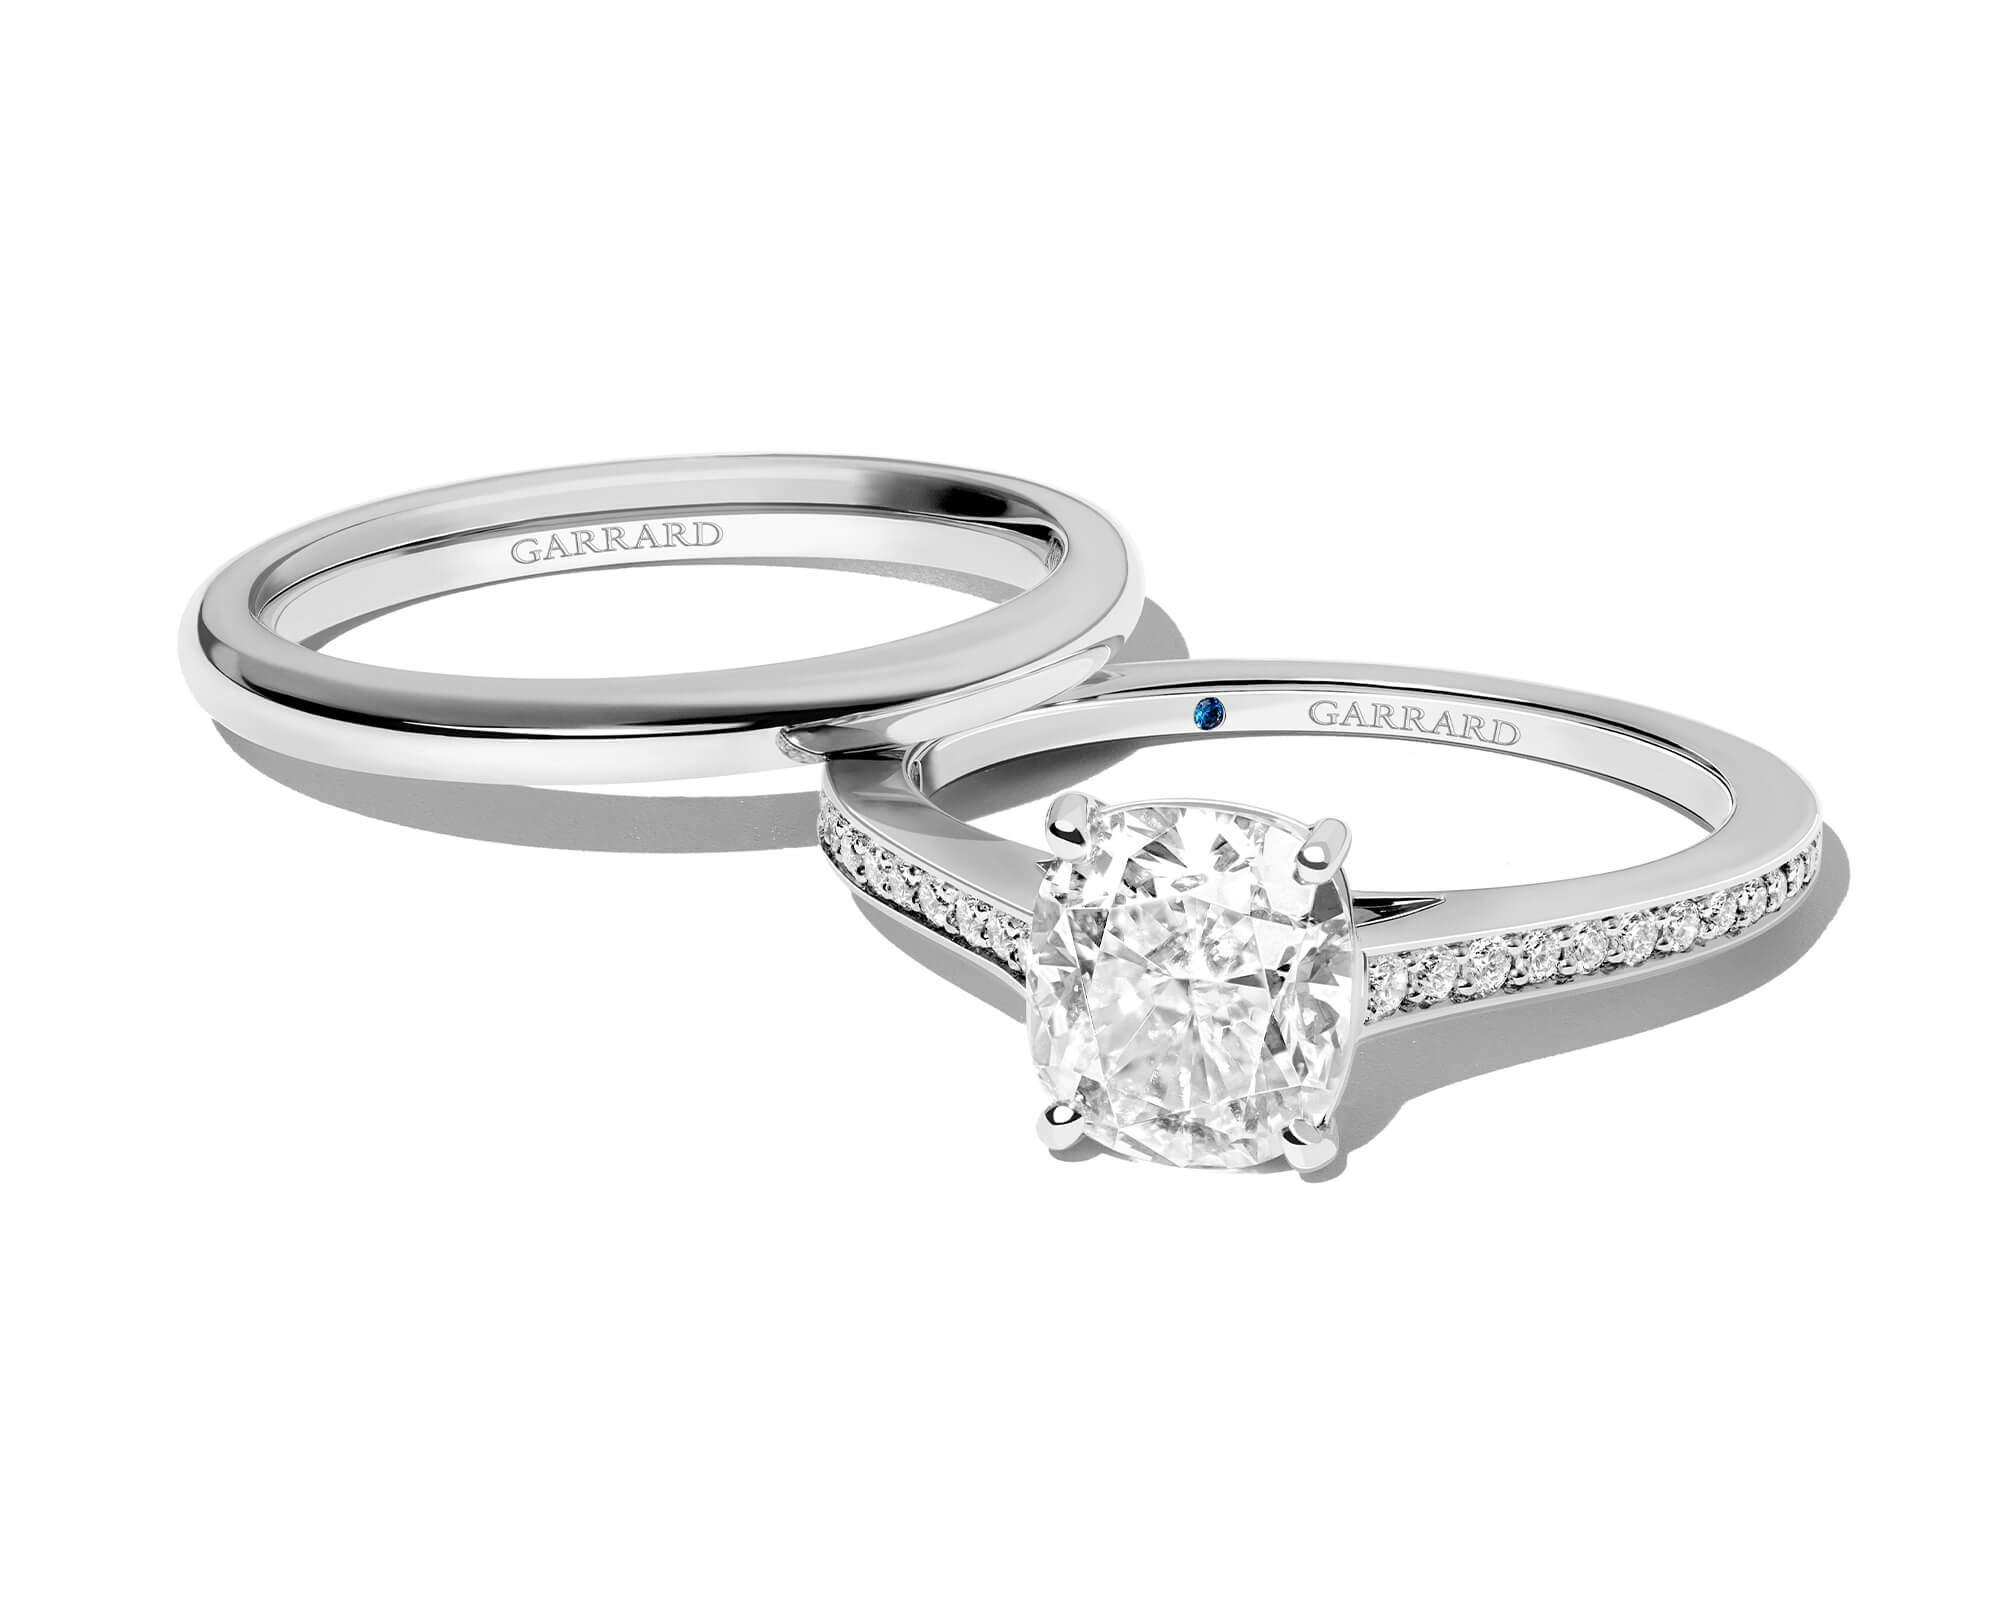 Garrard Cherish diamond engagement ring with platinum wedding band